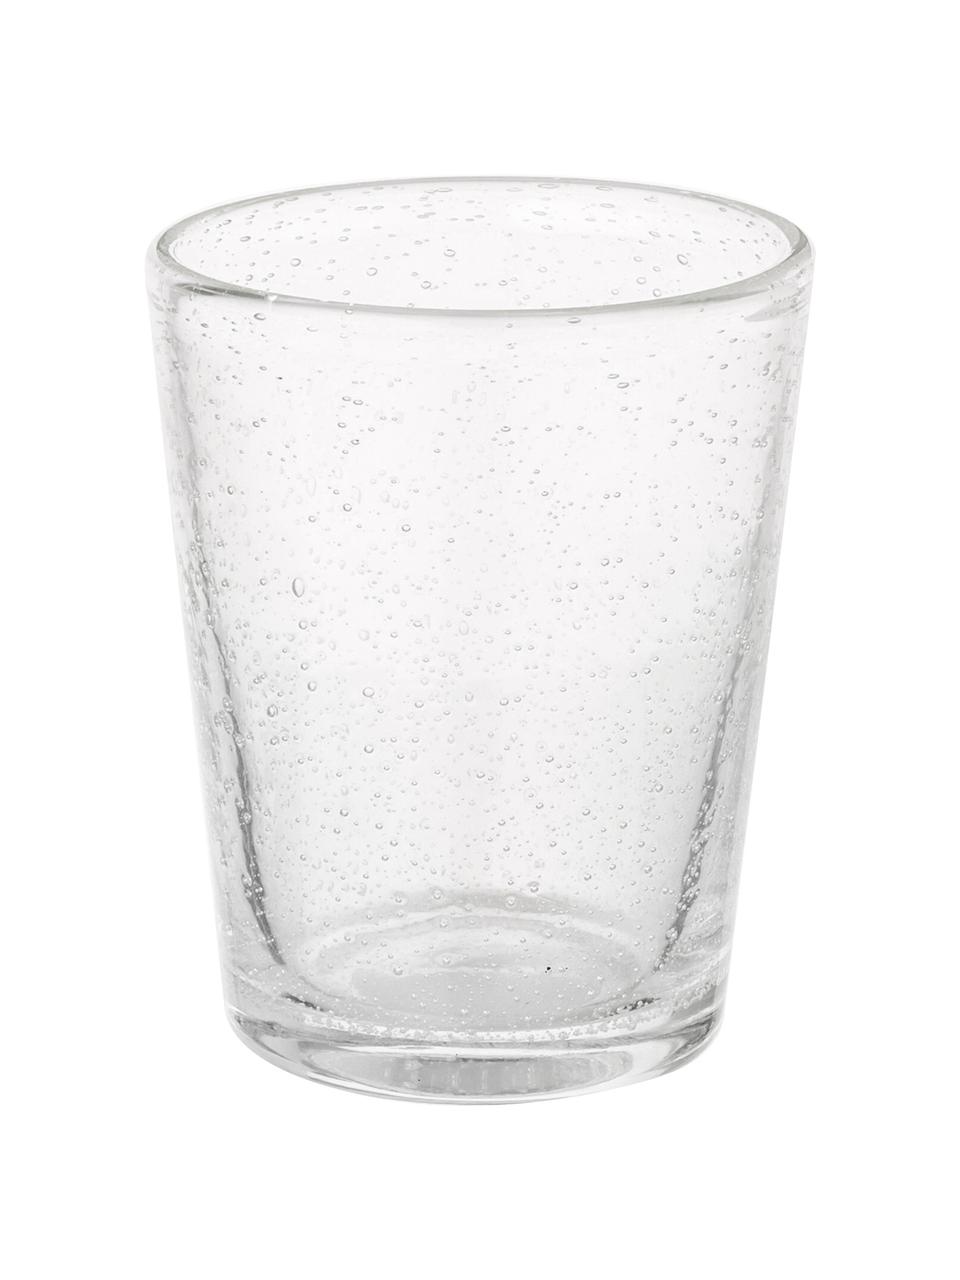 Mondgeblazen waterglazen Bubble, 4 stuks, Mondgeblazen glas, Transparant met luchtbellen, Ø 8 x H 10 cm, 250 ml